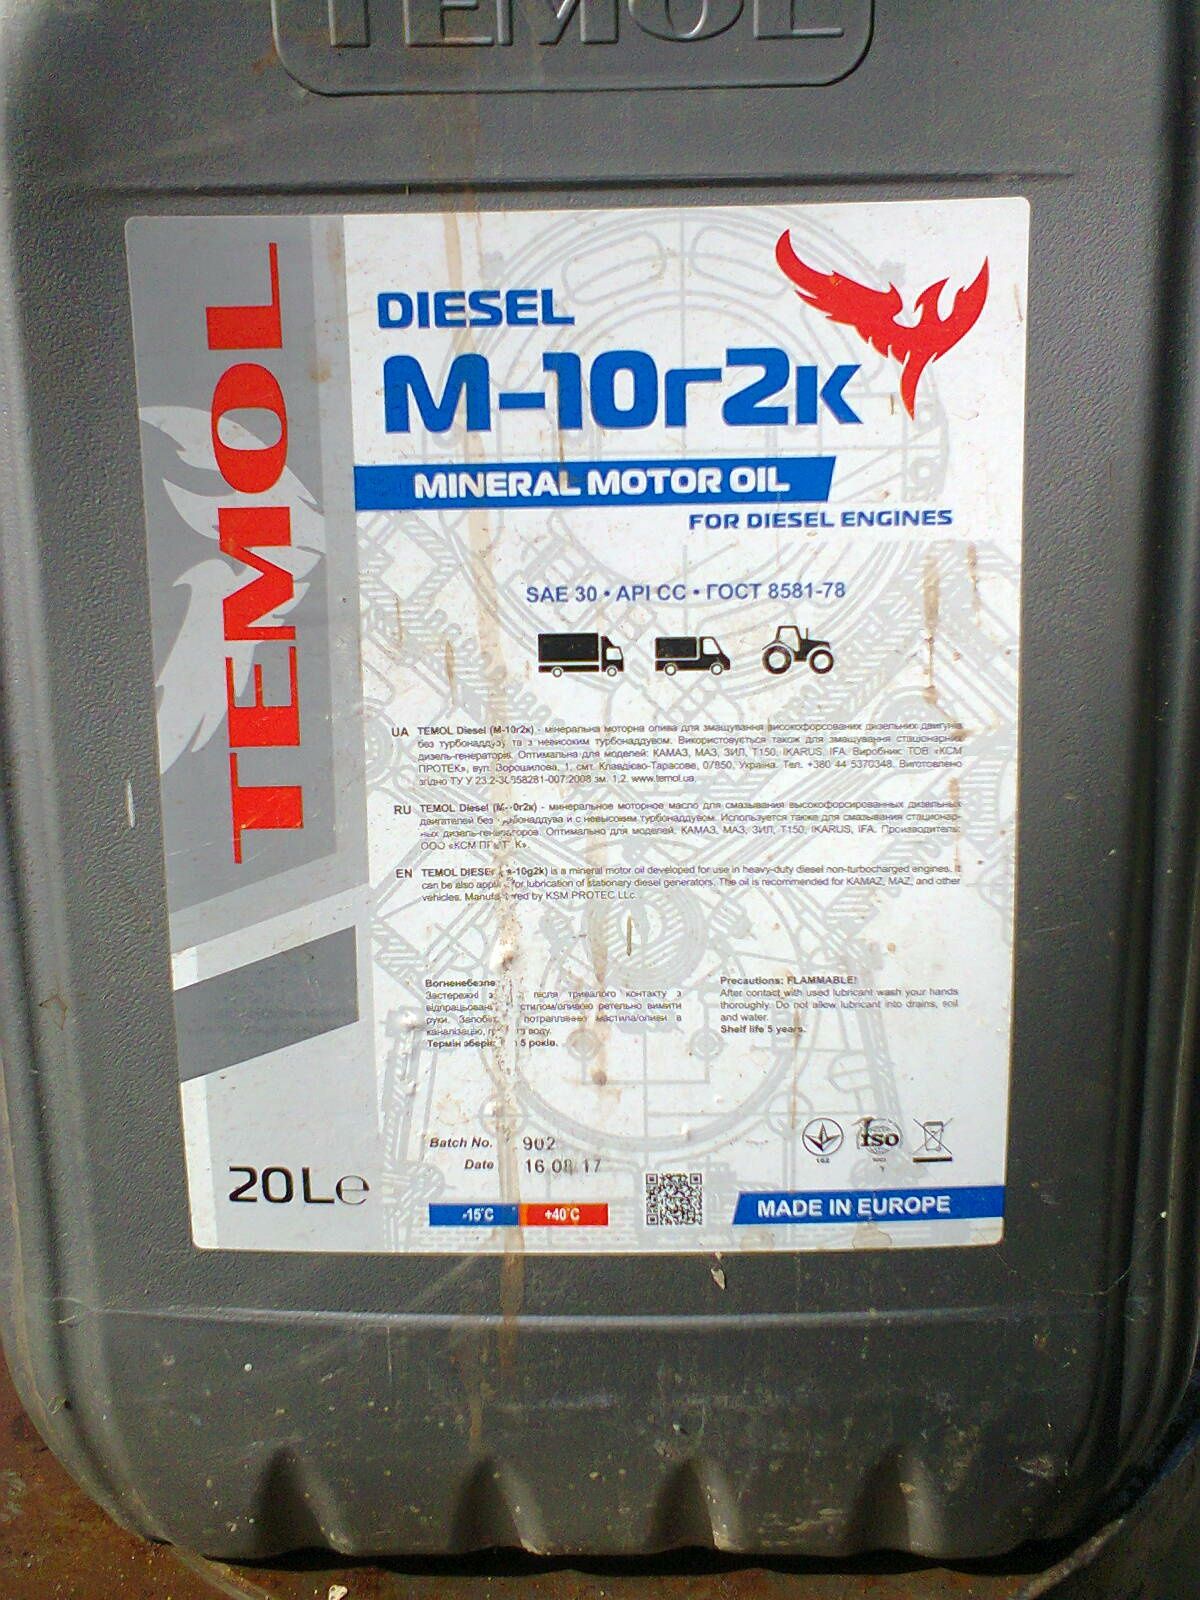 Моторное масло GNL 10w40 дизель/ бензин 60л,20л,наразлив